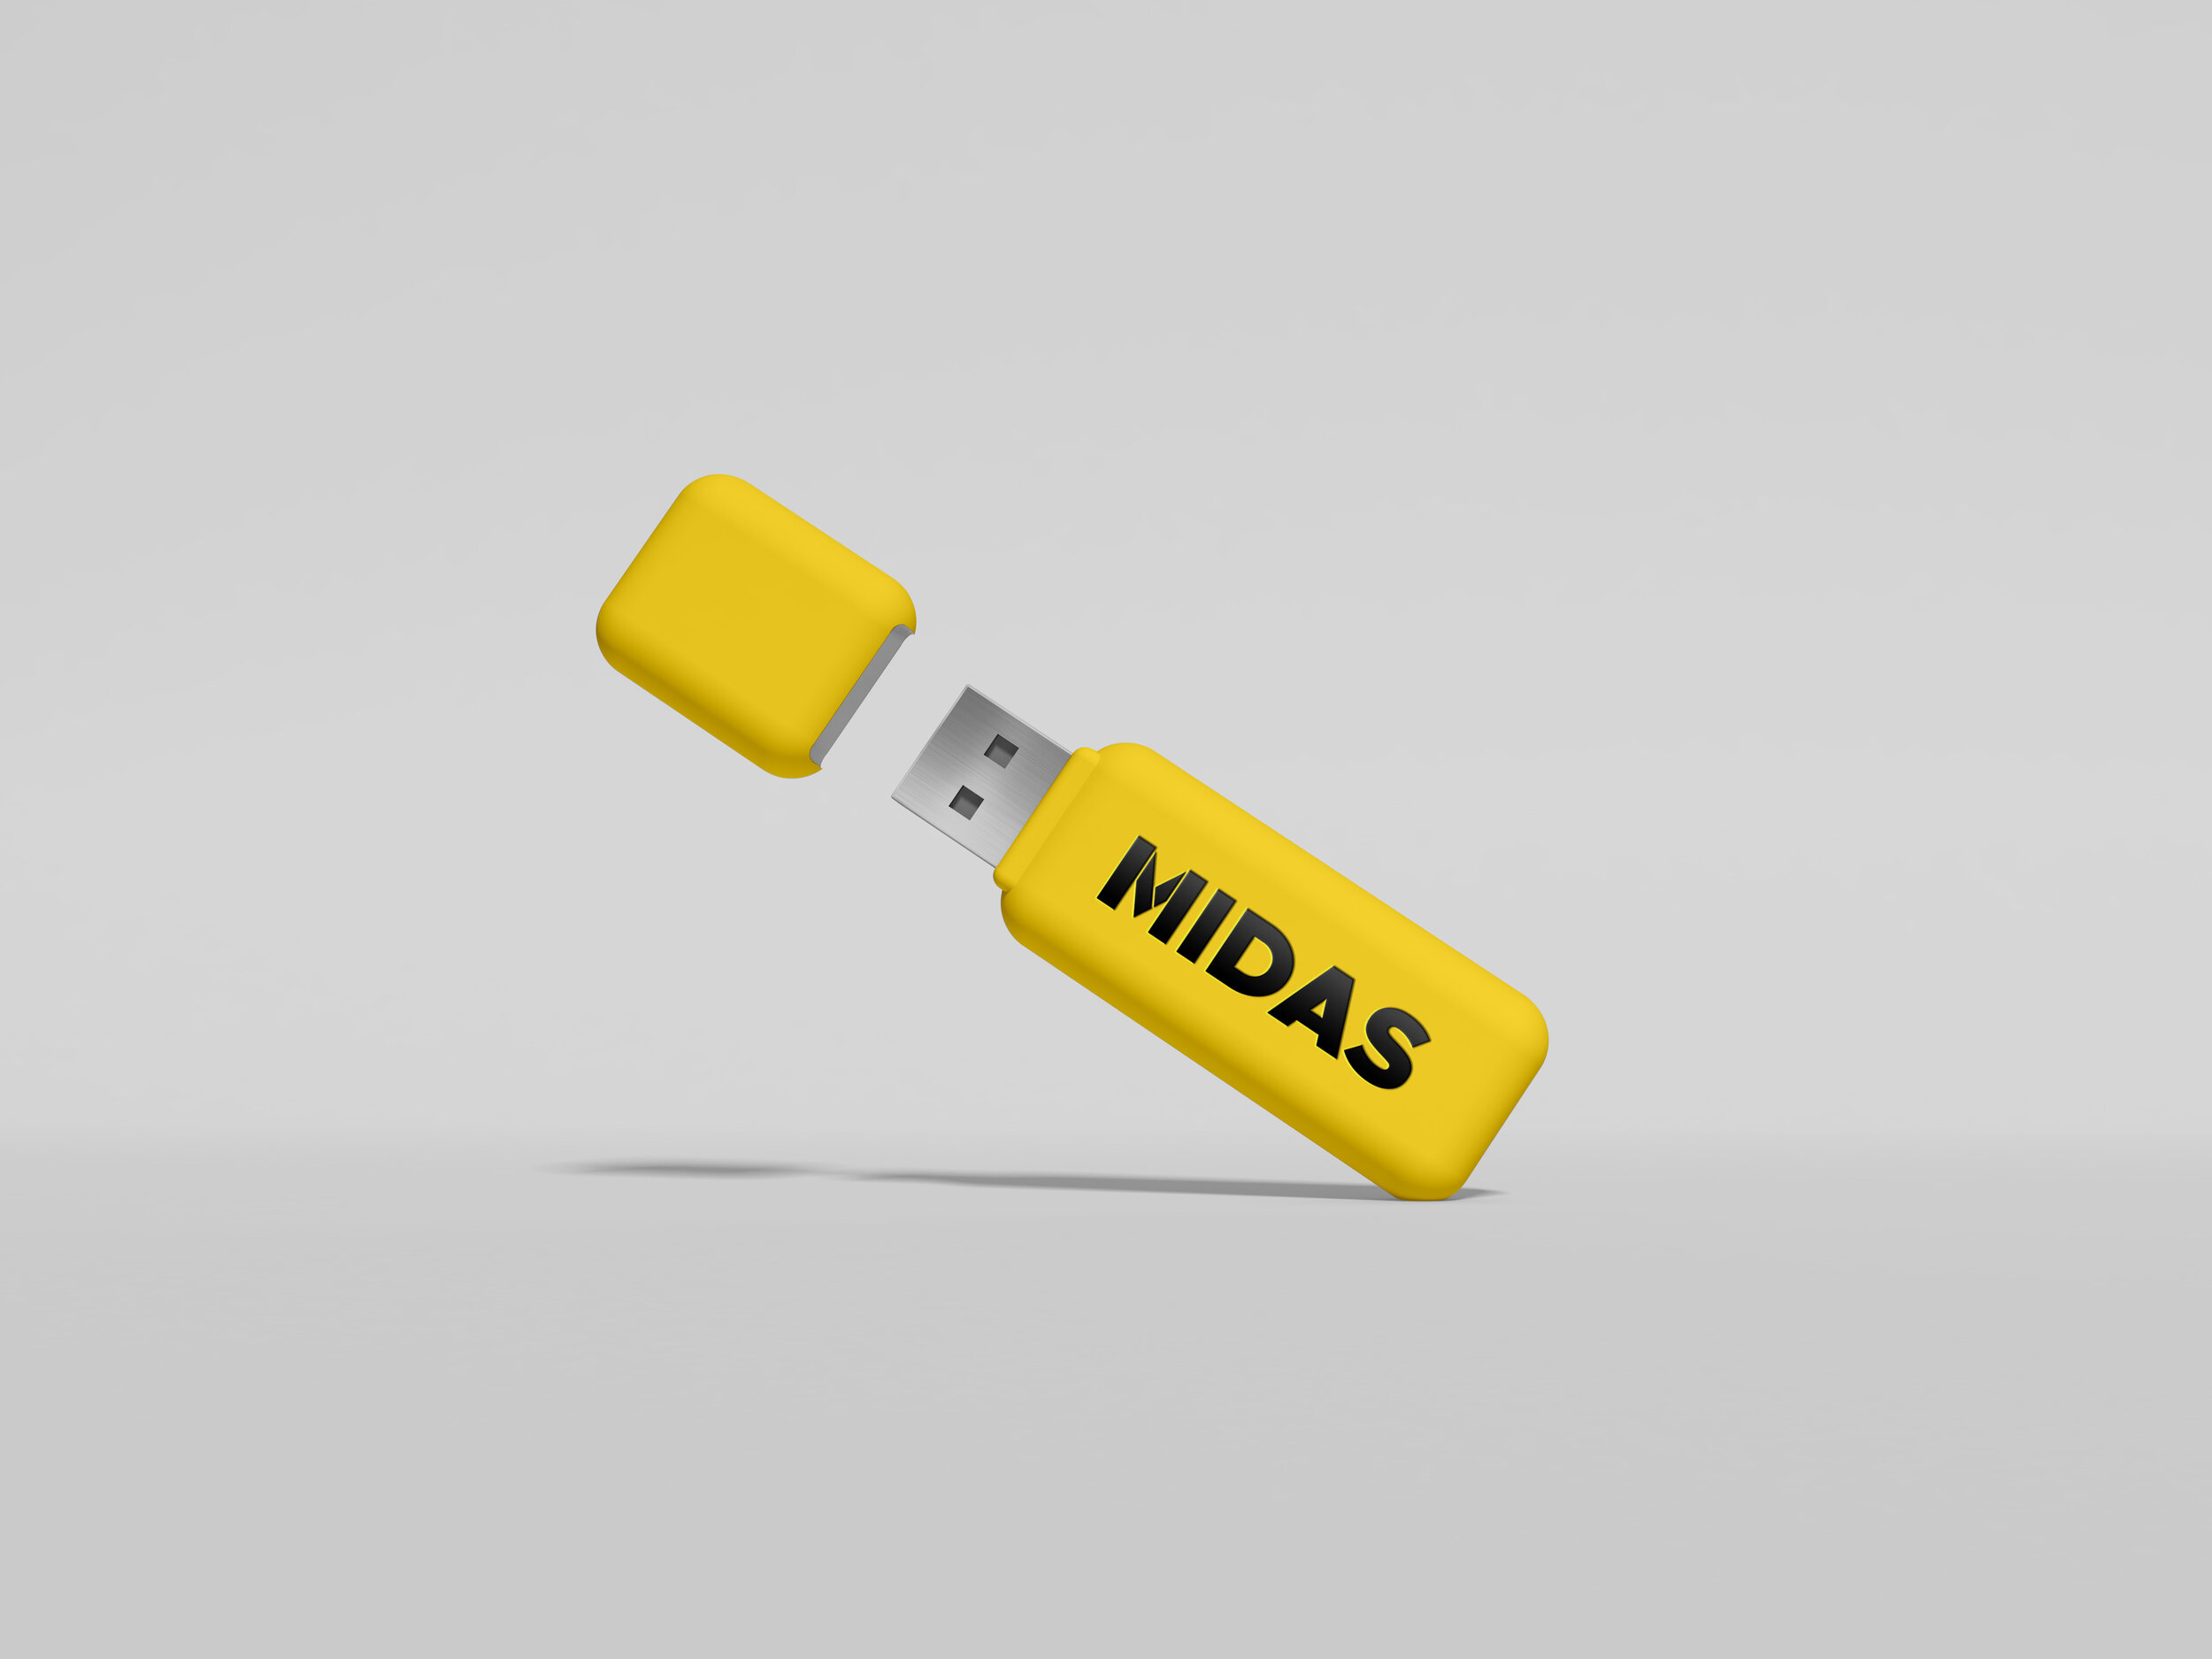 Midas_USB_KEY_01.jpg